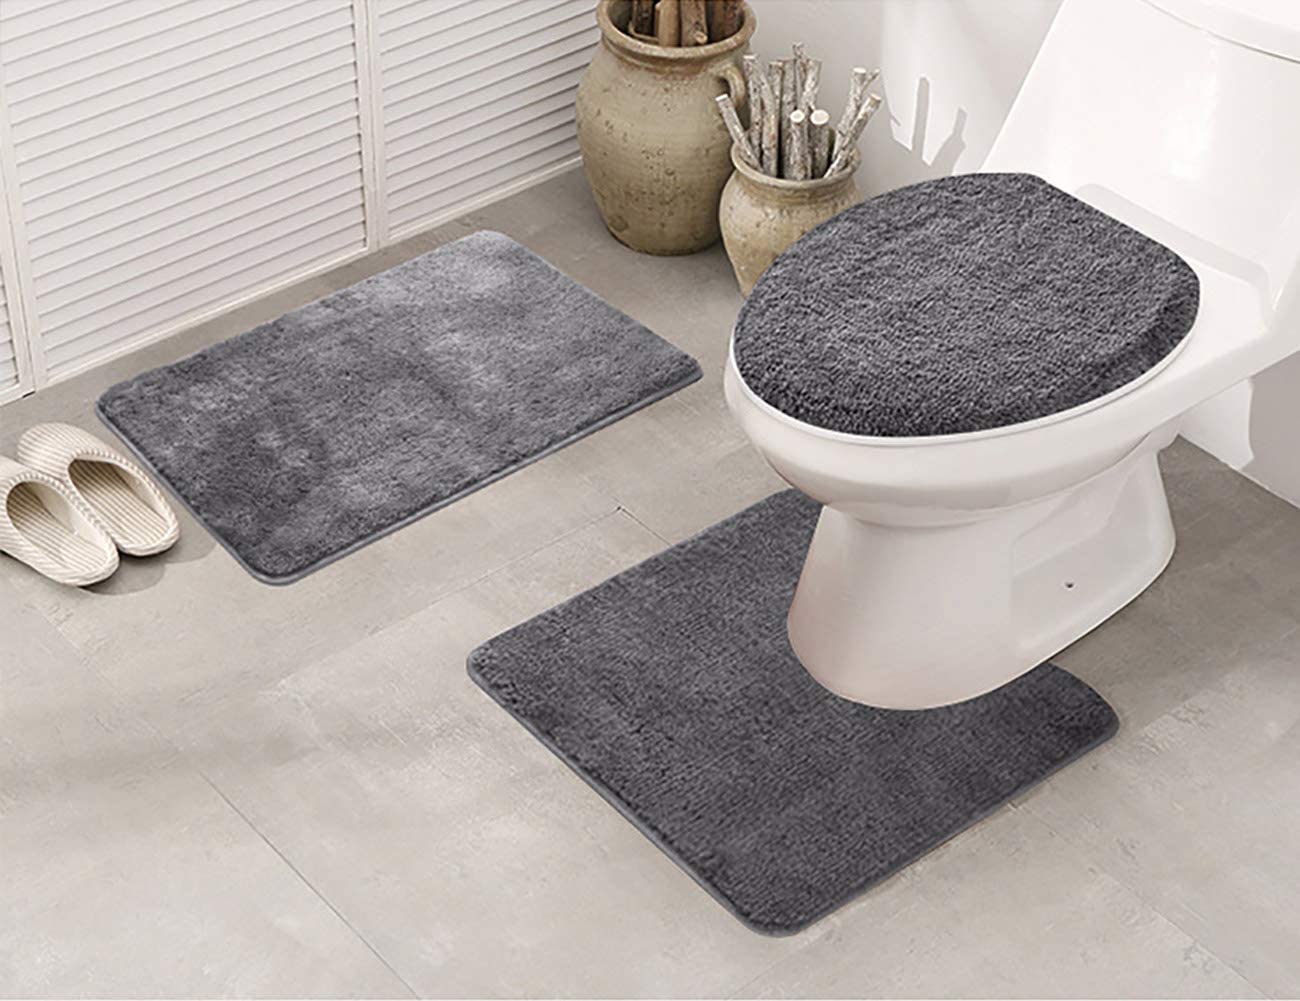 Black Swan Bath Mat Set Water Absorbent Contour Rug Toilet Floor Carpet 3 Pieces 